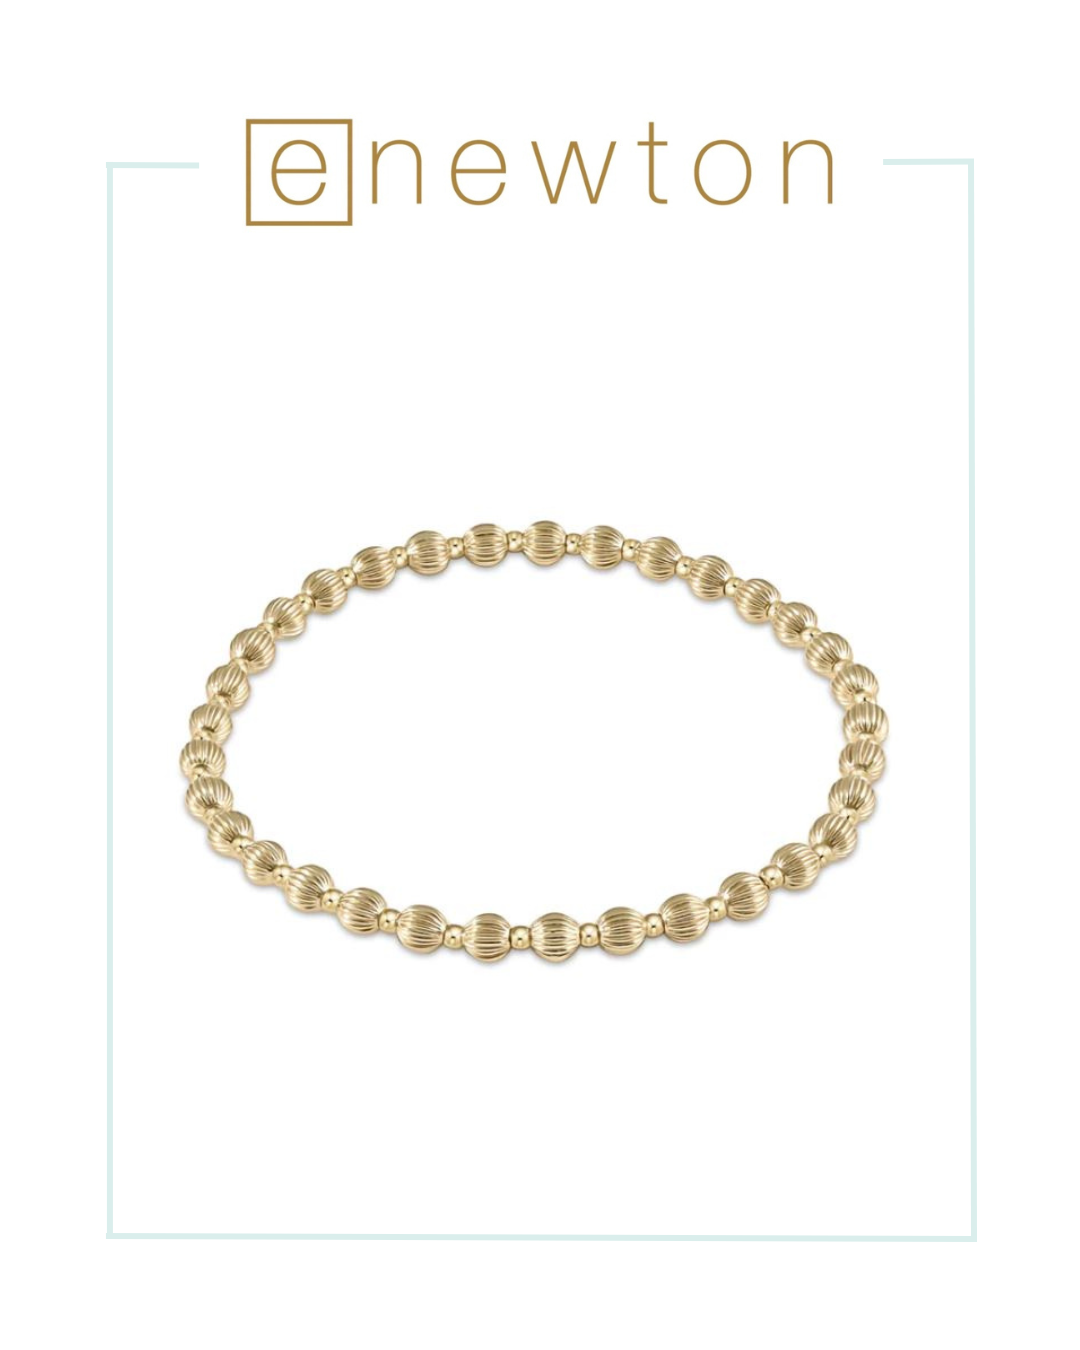 E Newton Dignity Grateful Pattern 4mm Bead Bracelet - Gold-Bracelets-ENEWTON-The Village Shoppe, Women’s Fashion Boutique, Shop Online and In Store - Located in Muscle Shoals, AL.